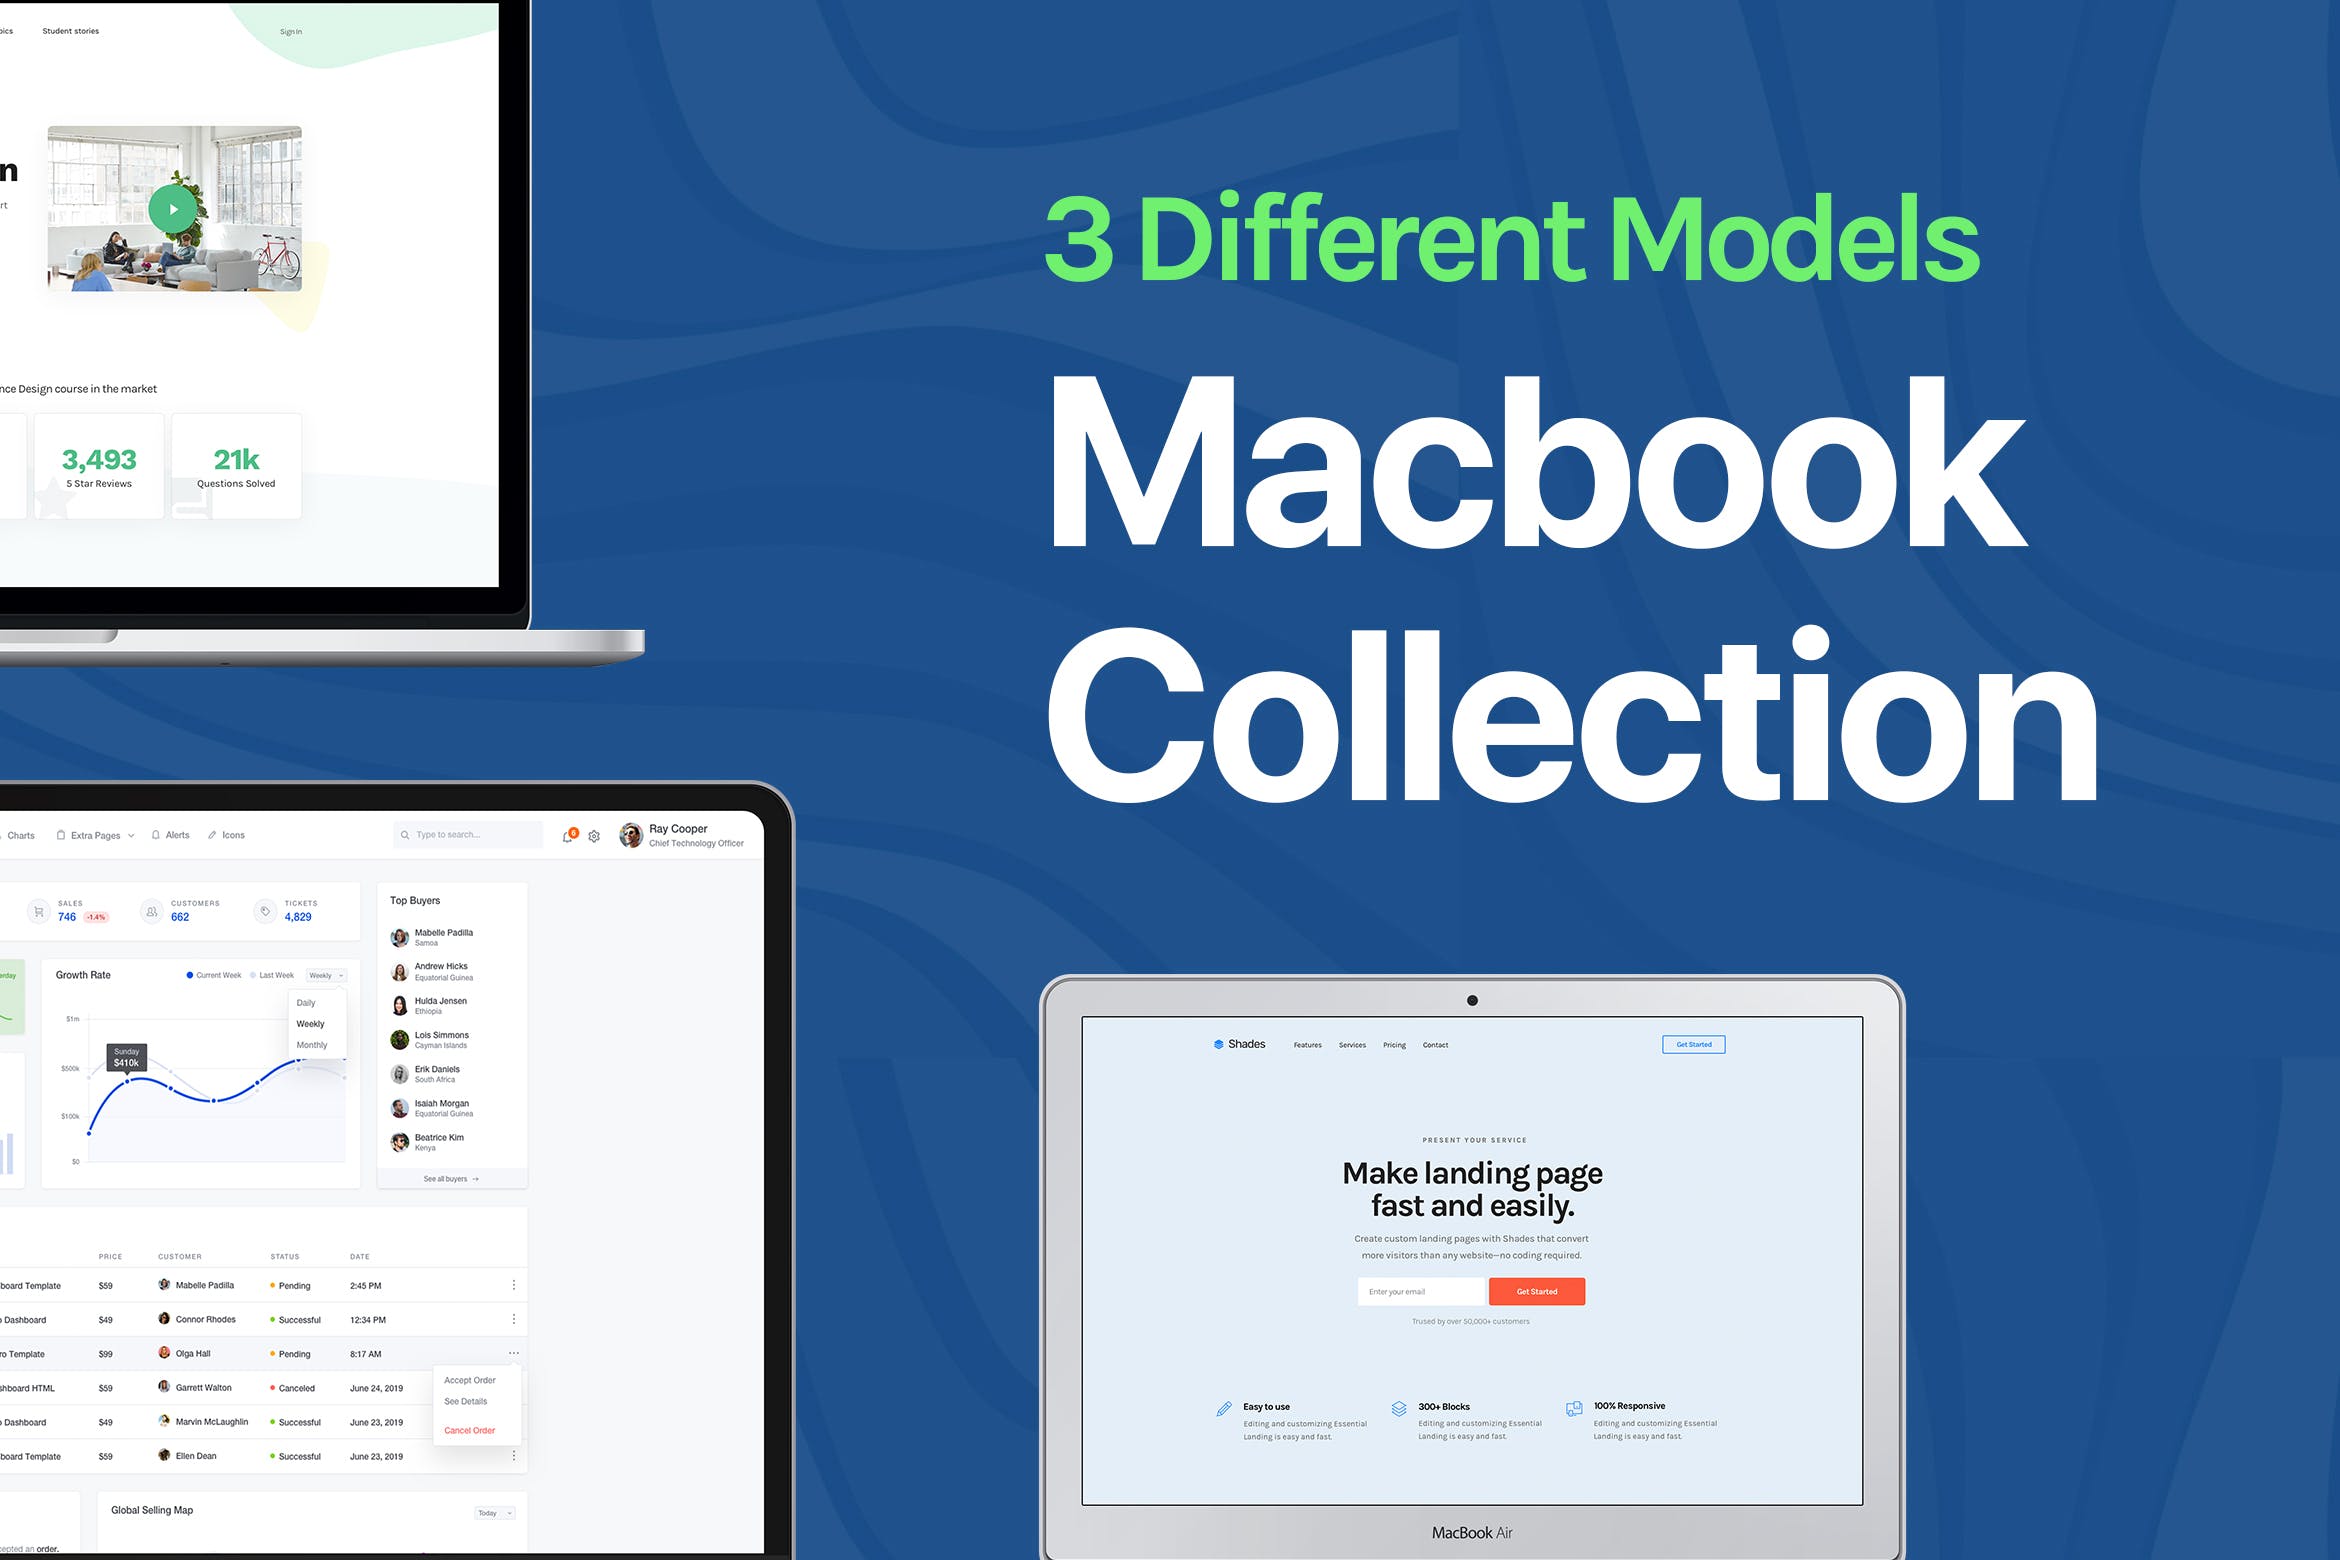 Apple MacBook笔记本电脑Web设计效果图样机 Apple Macbook Mockup Collection插图